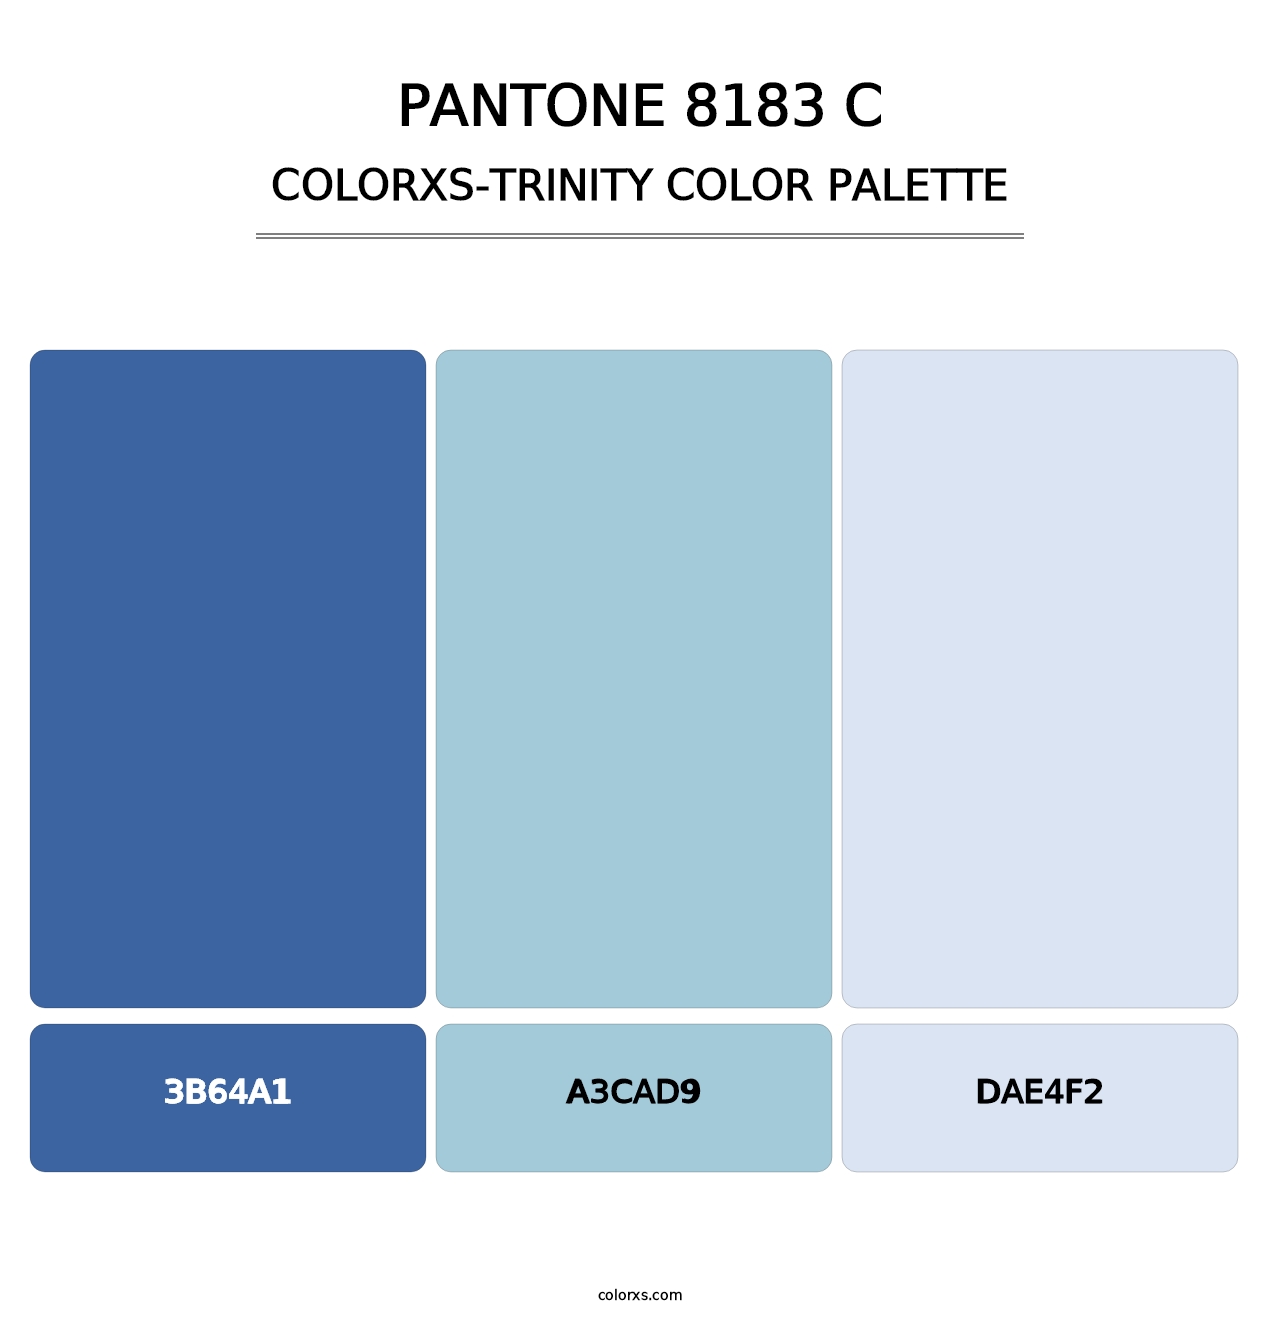 PANTONE 8183 C - Colorxs Trinity Palette